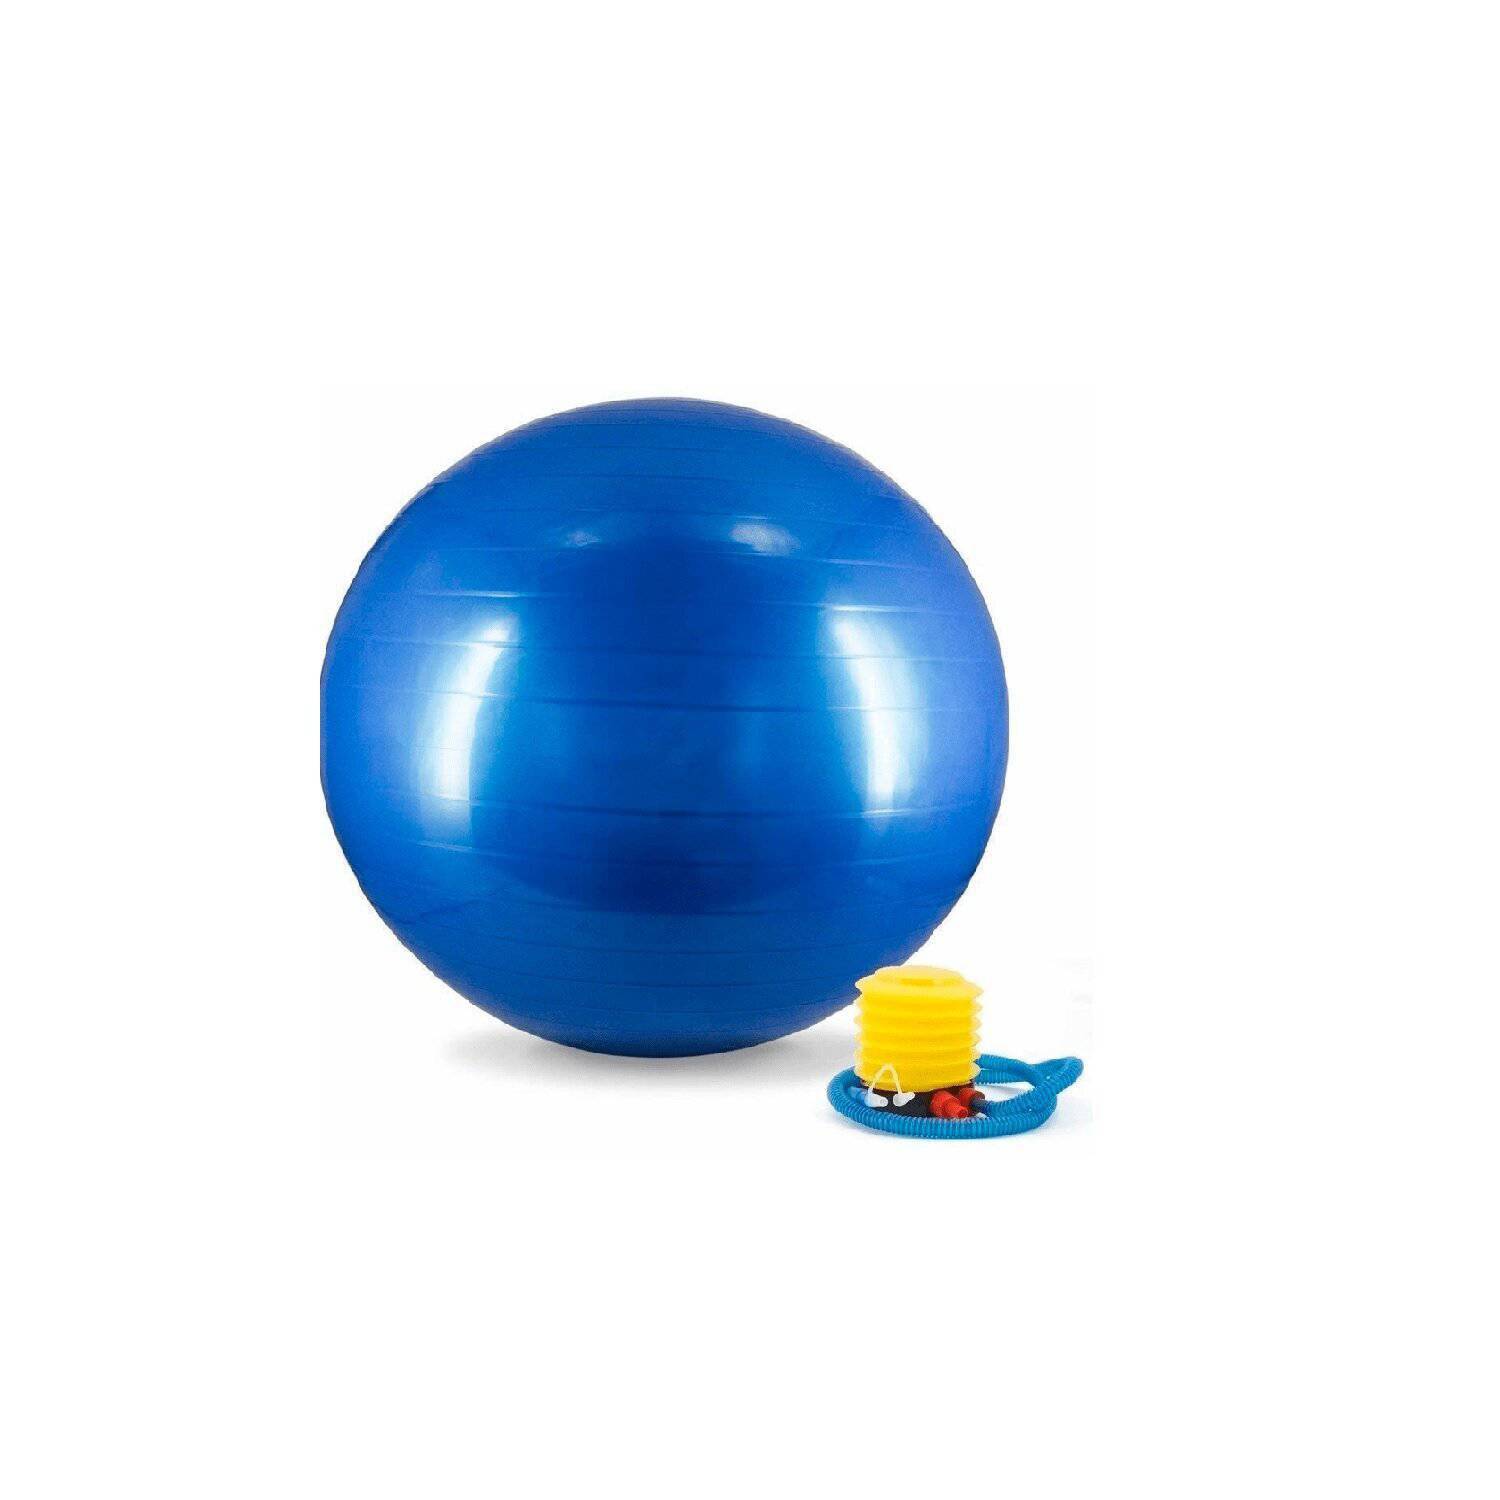 Balon de Pilates Yoga + Inflador